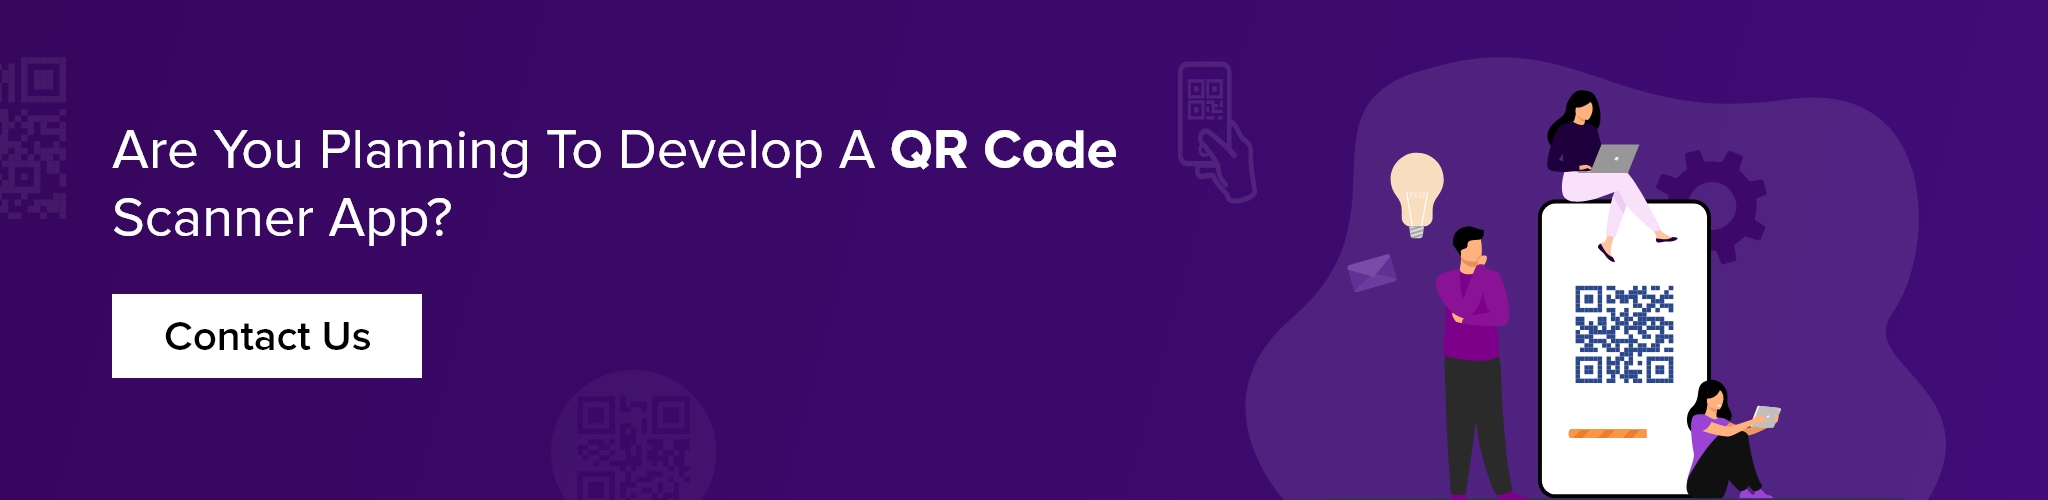 QR code app development with experts